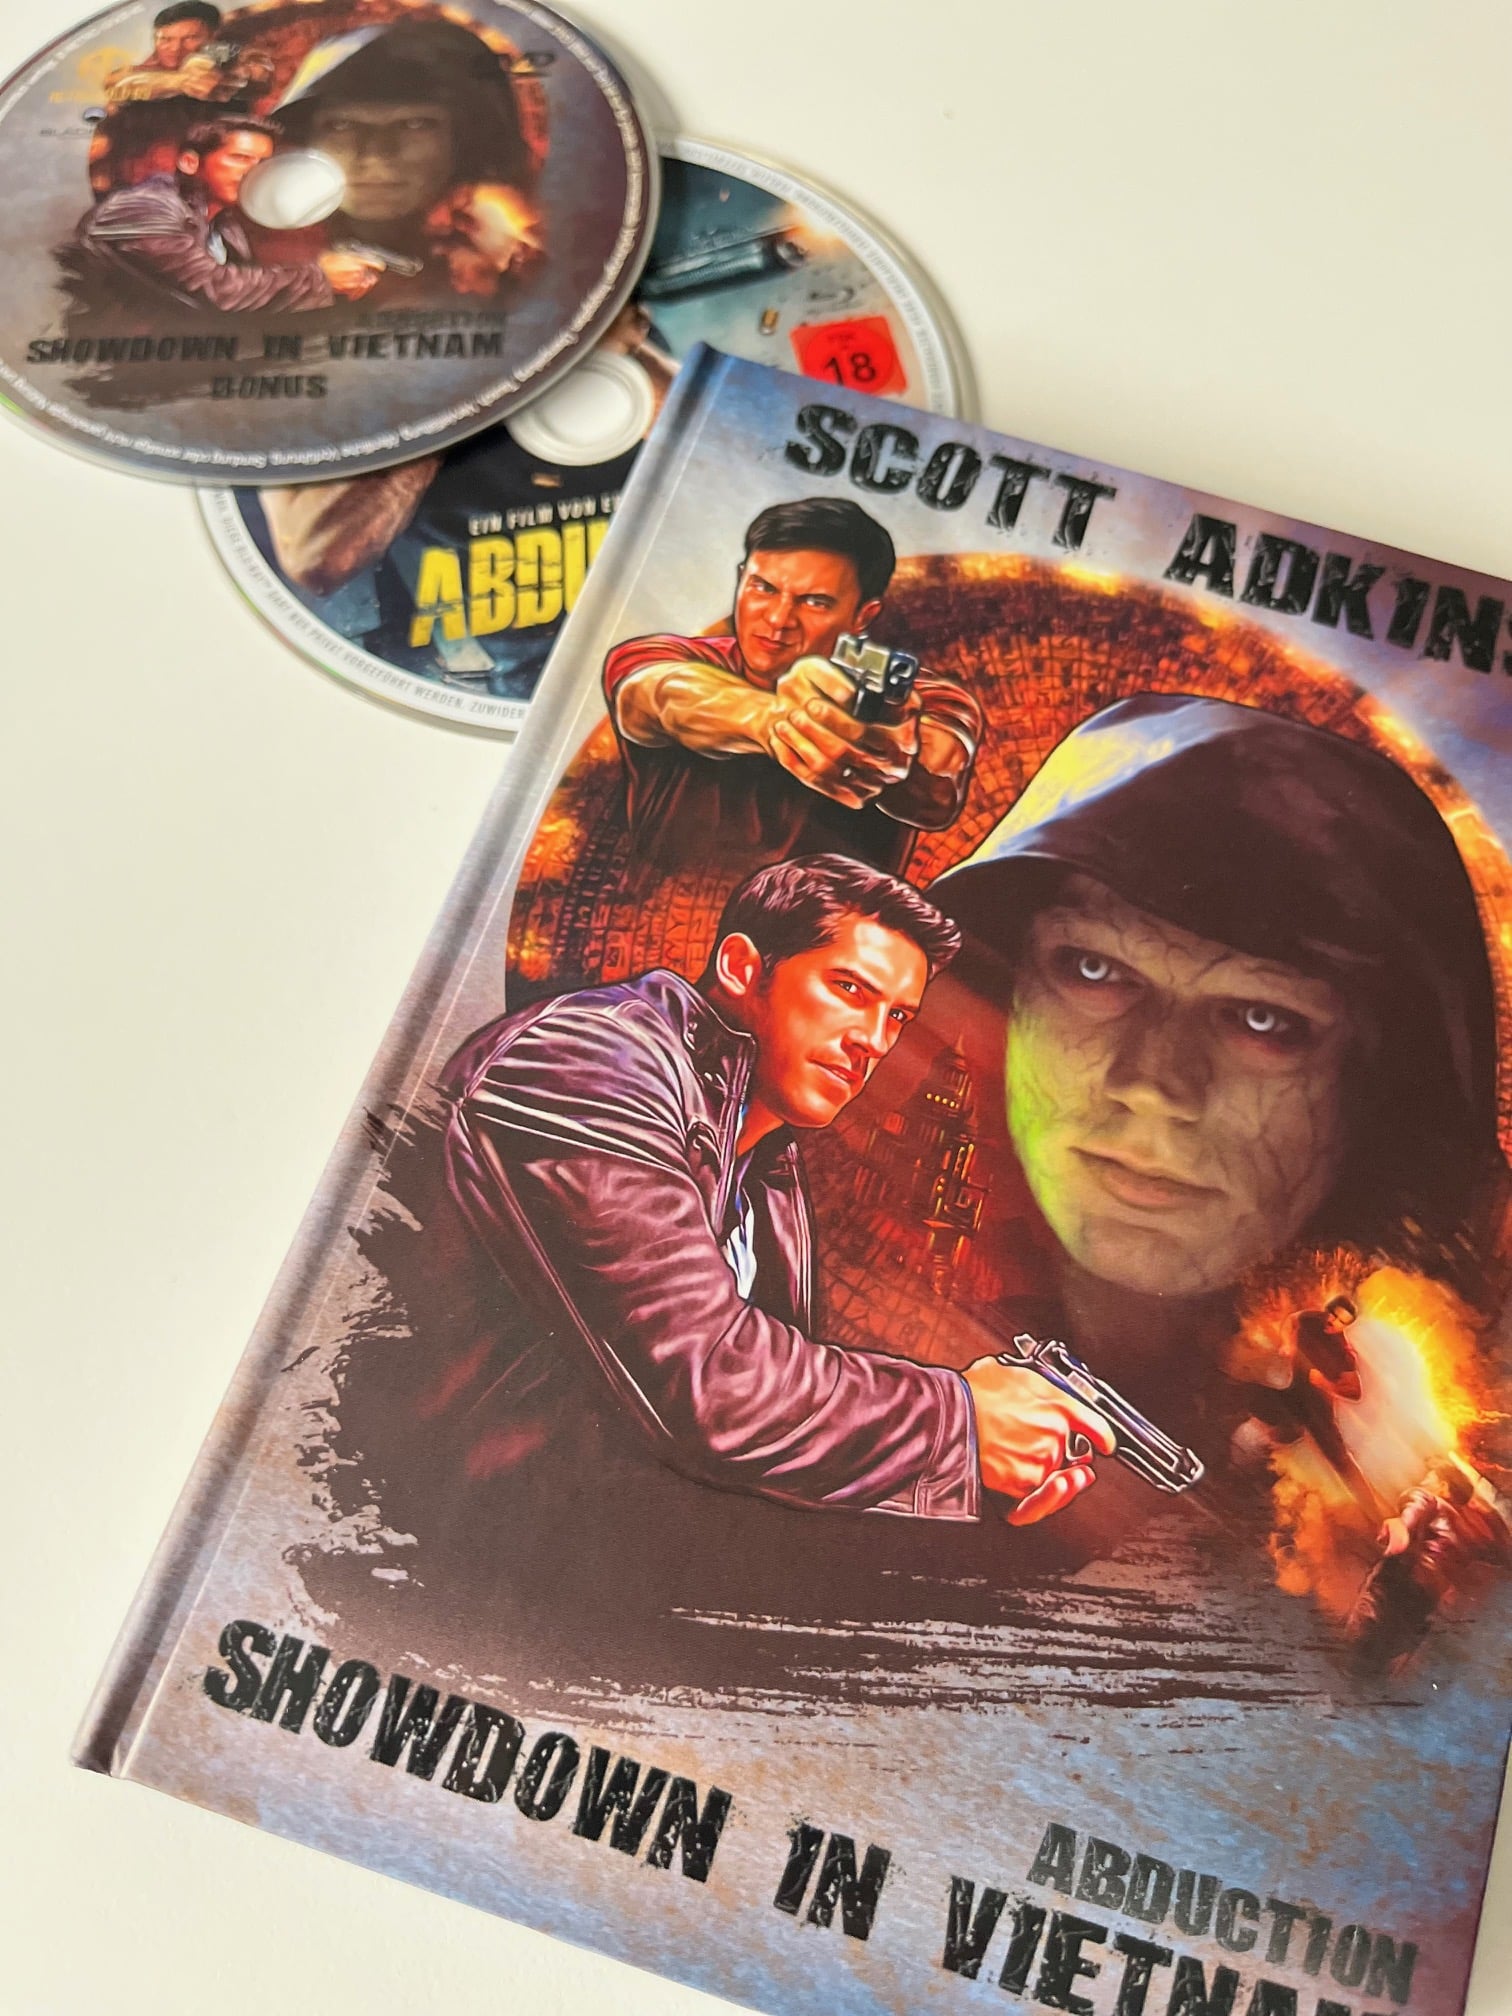 [Review] Abduction – Showdown in Vietnam (2019) im Blu-ray-Mediabook (inkl. Bonus-DVD)